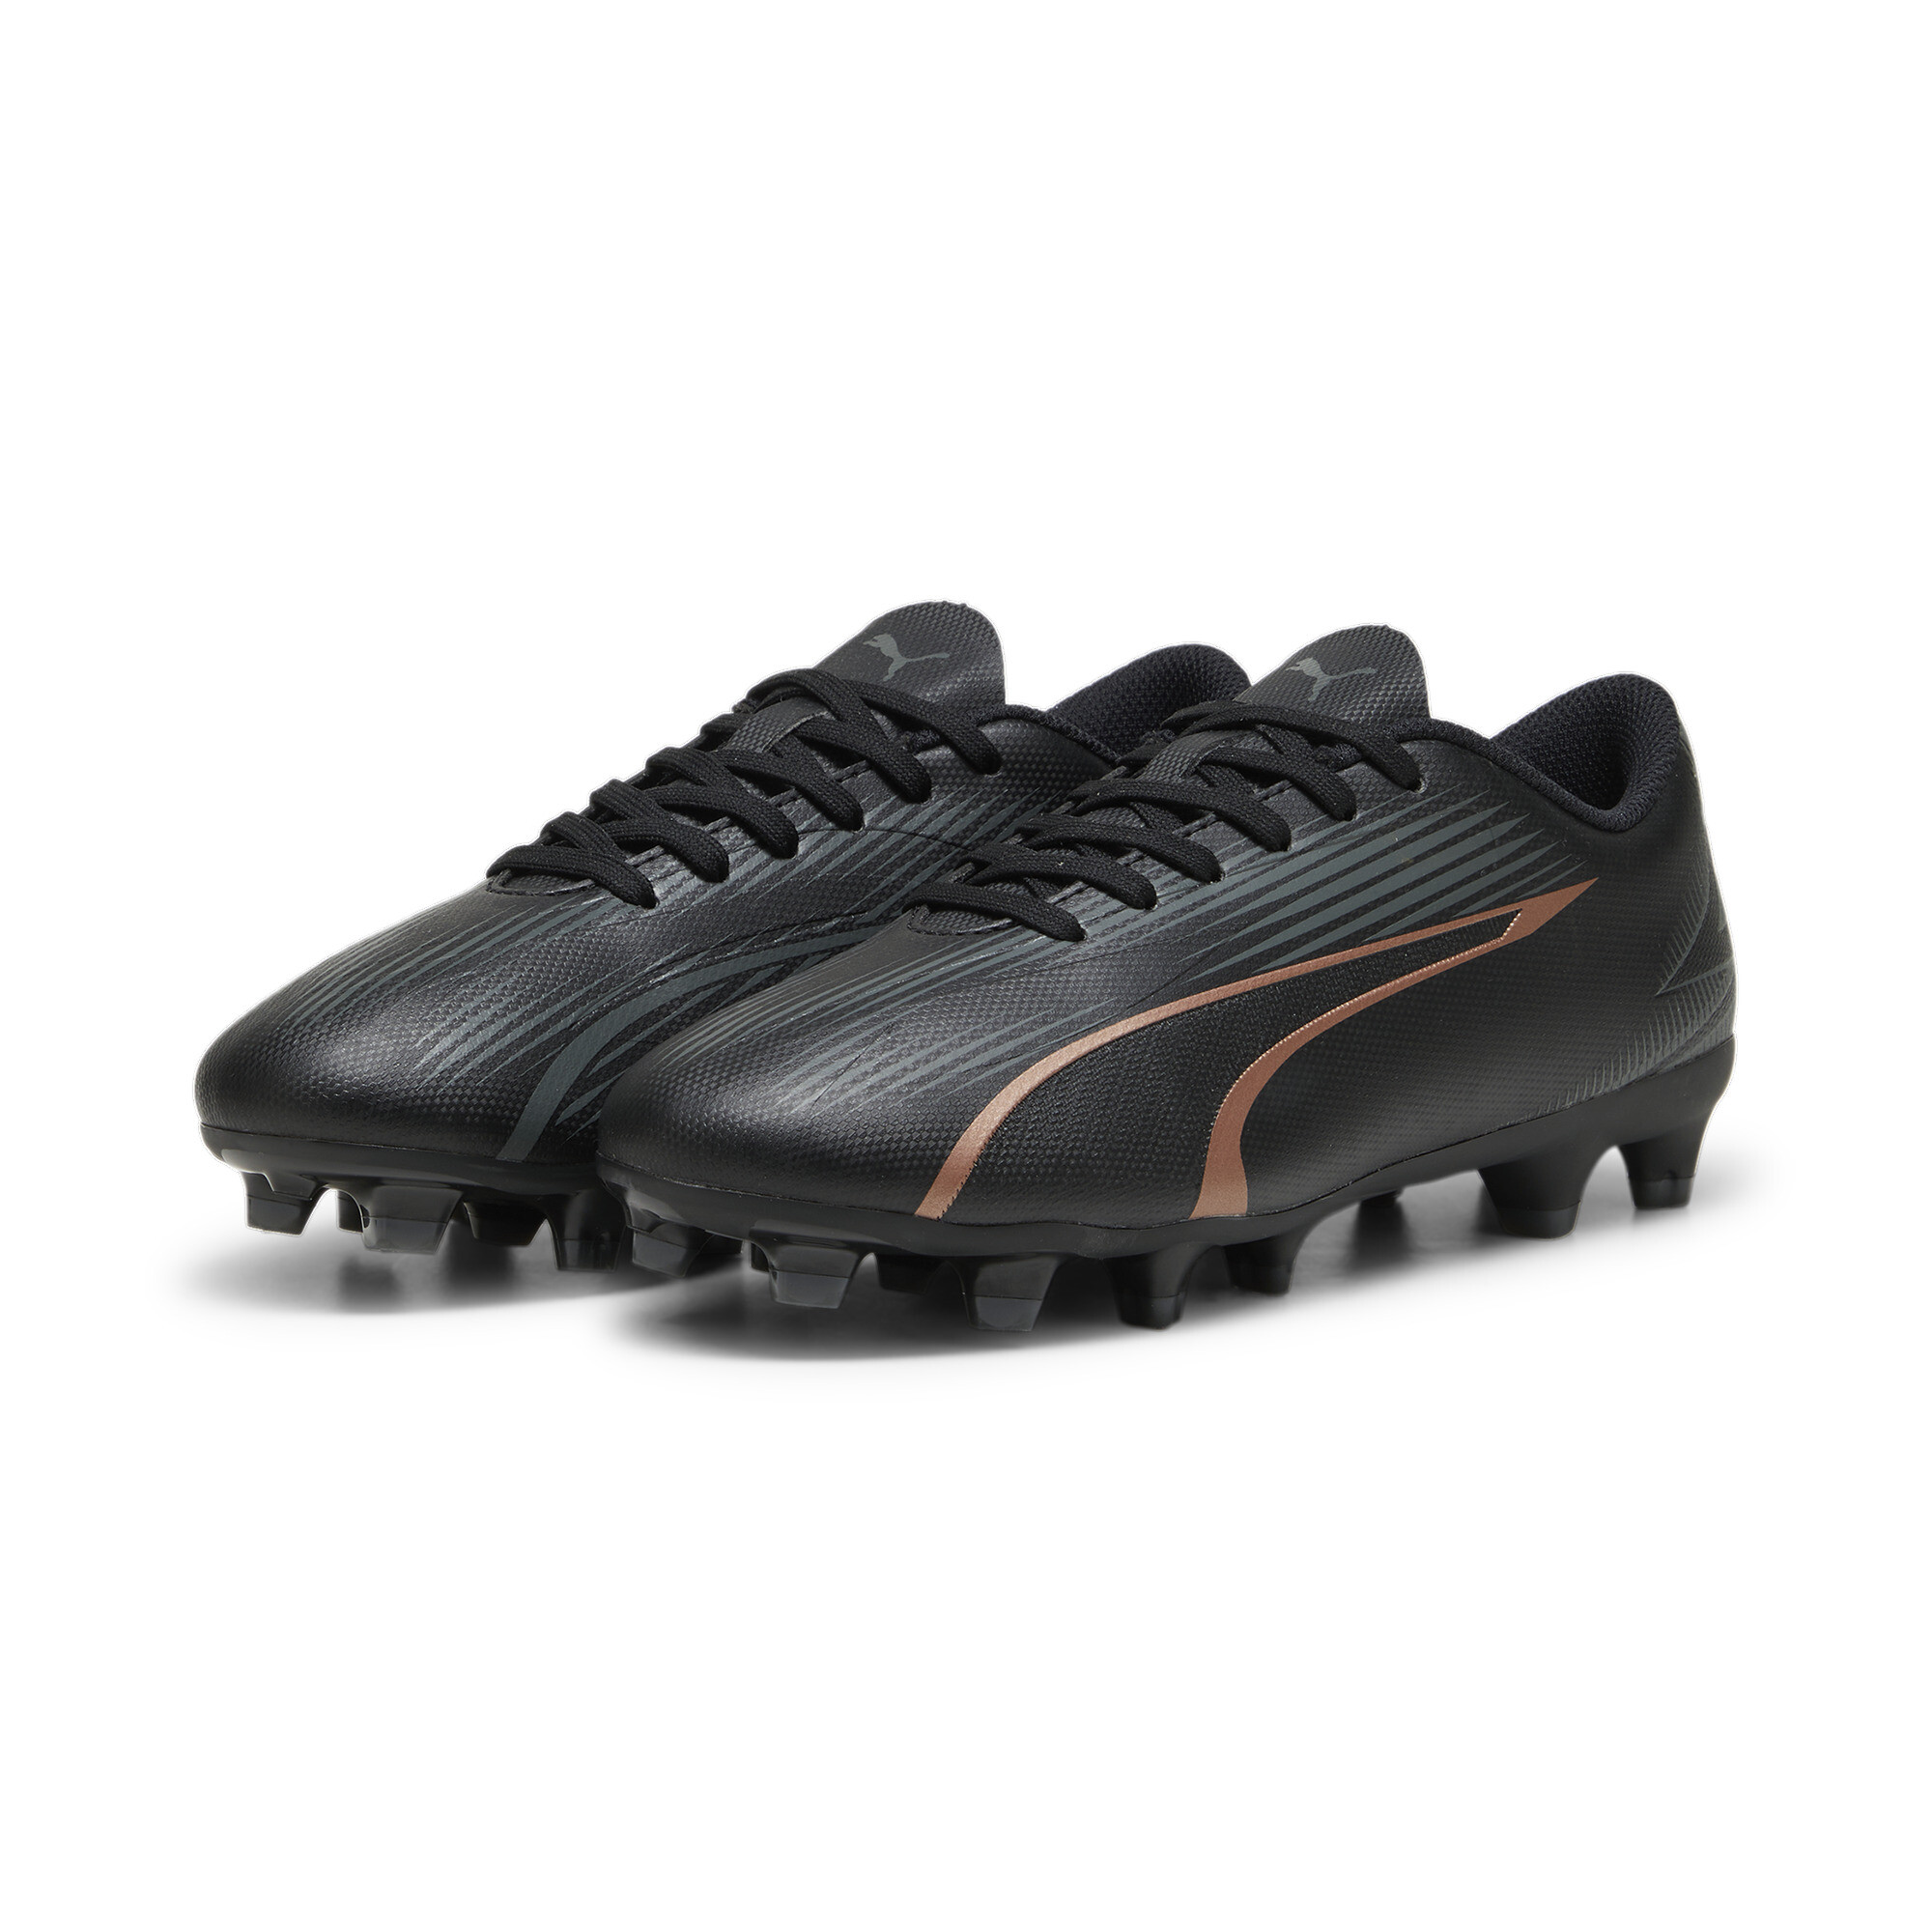 PUMA ULTRA PLAY FG/AG Youth Football Boots In Black, Size EU 29